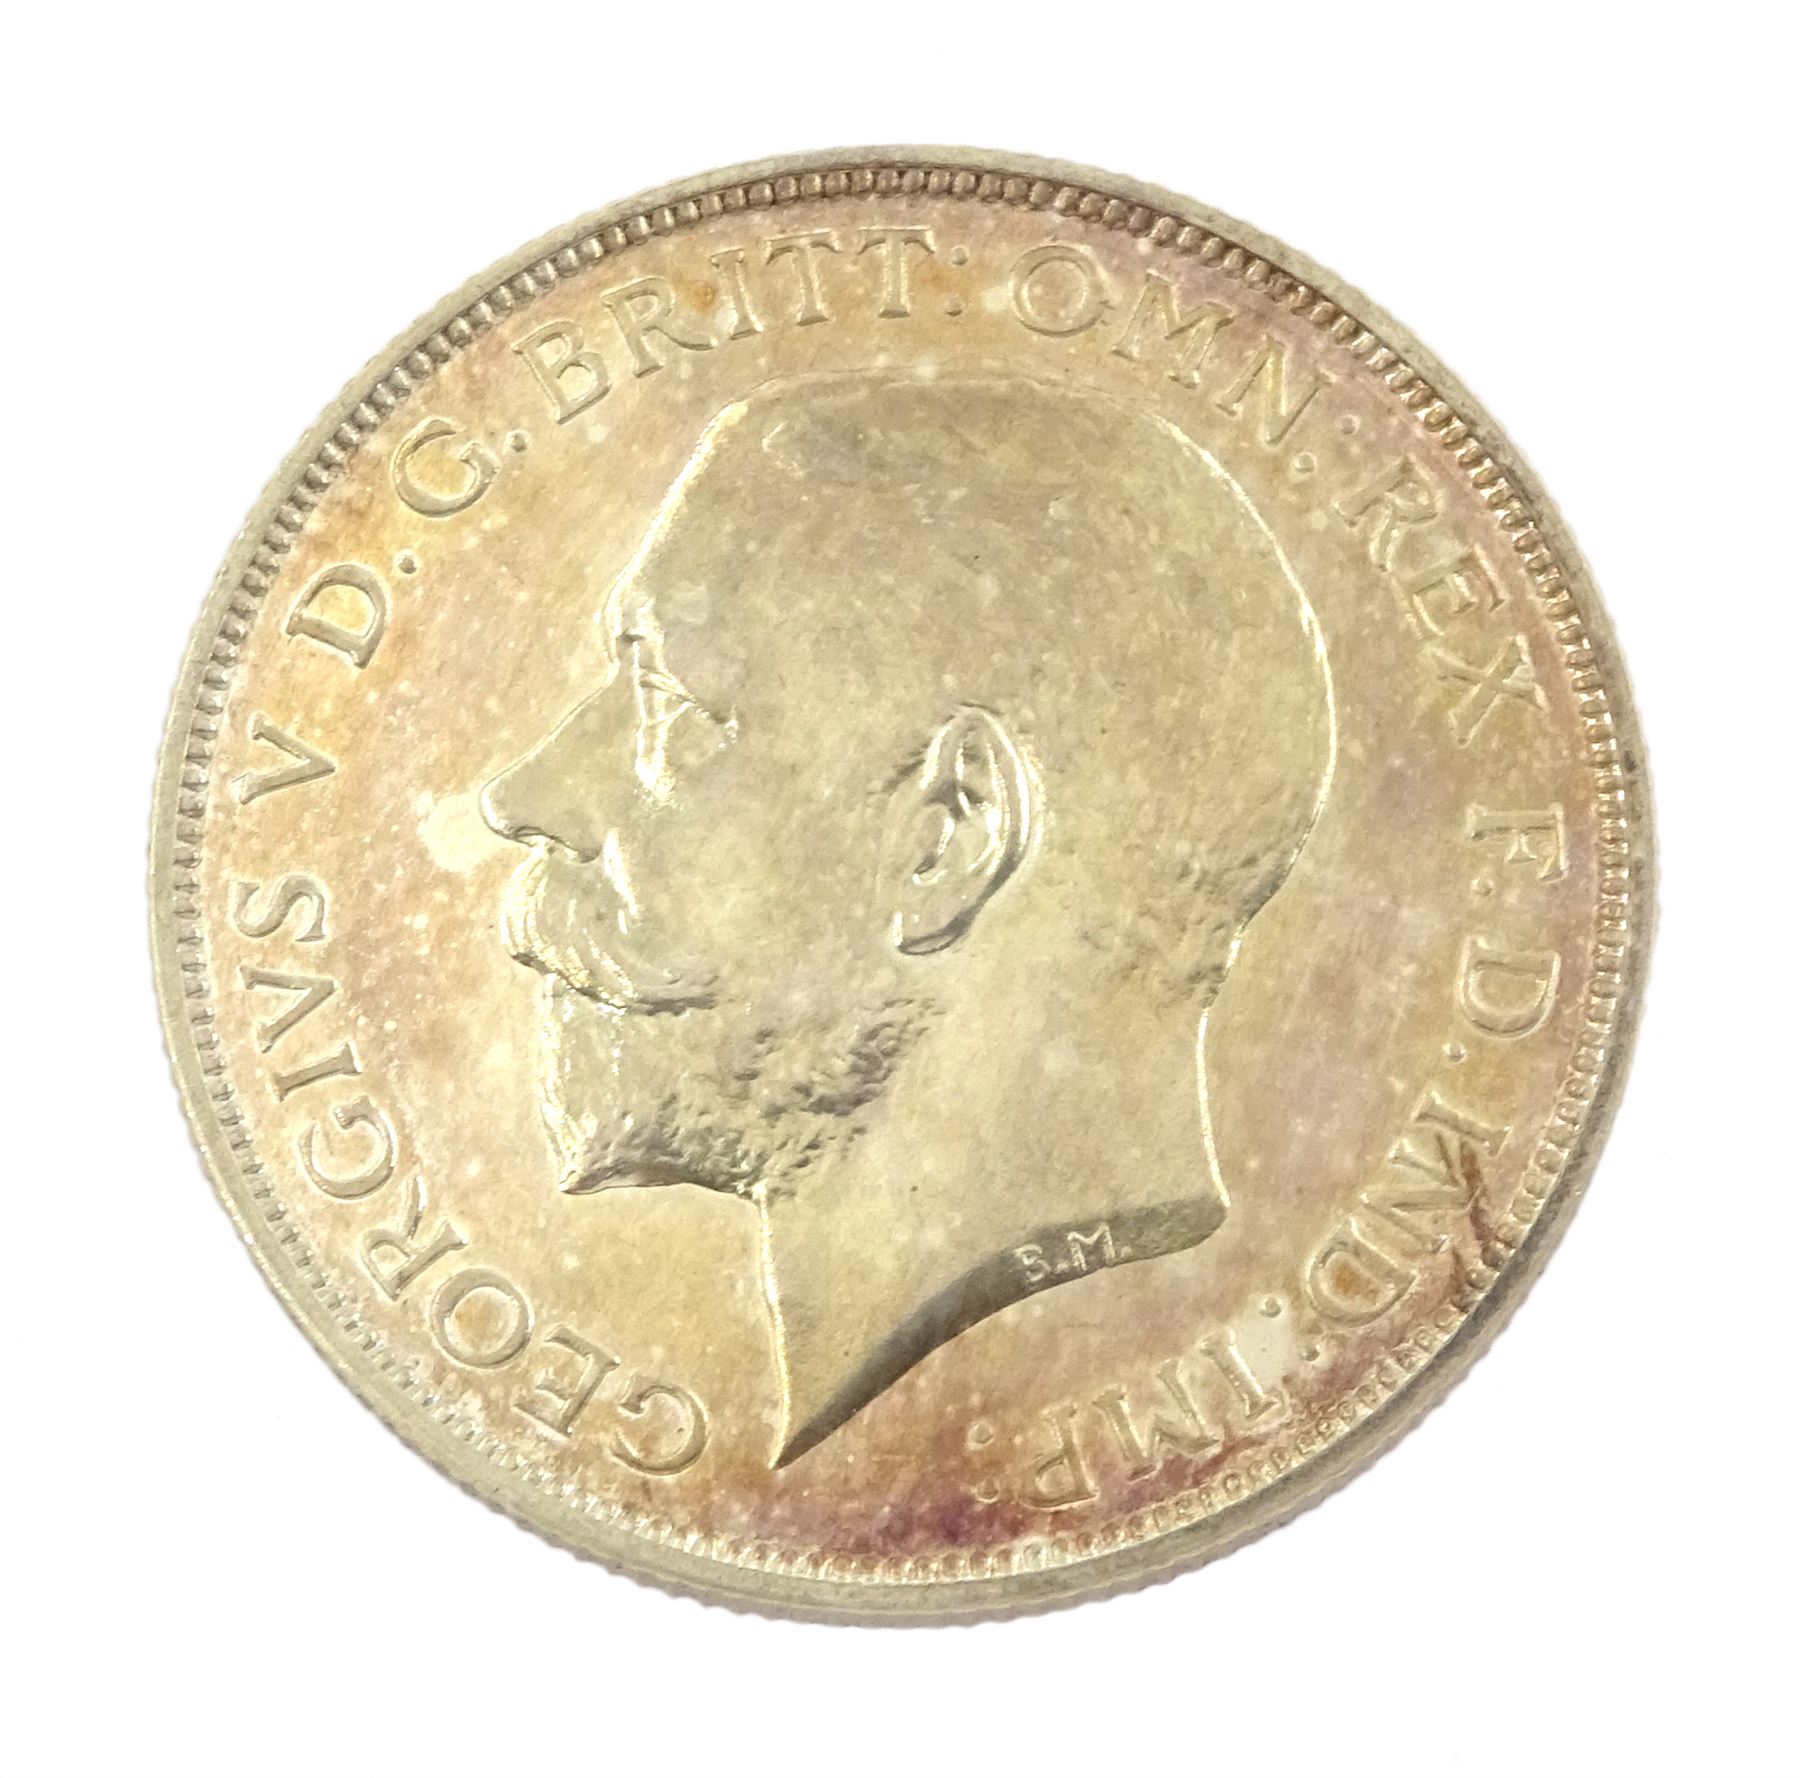 King George V 1911 proof long coin set - Image 16 of 28